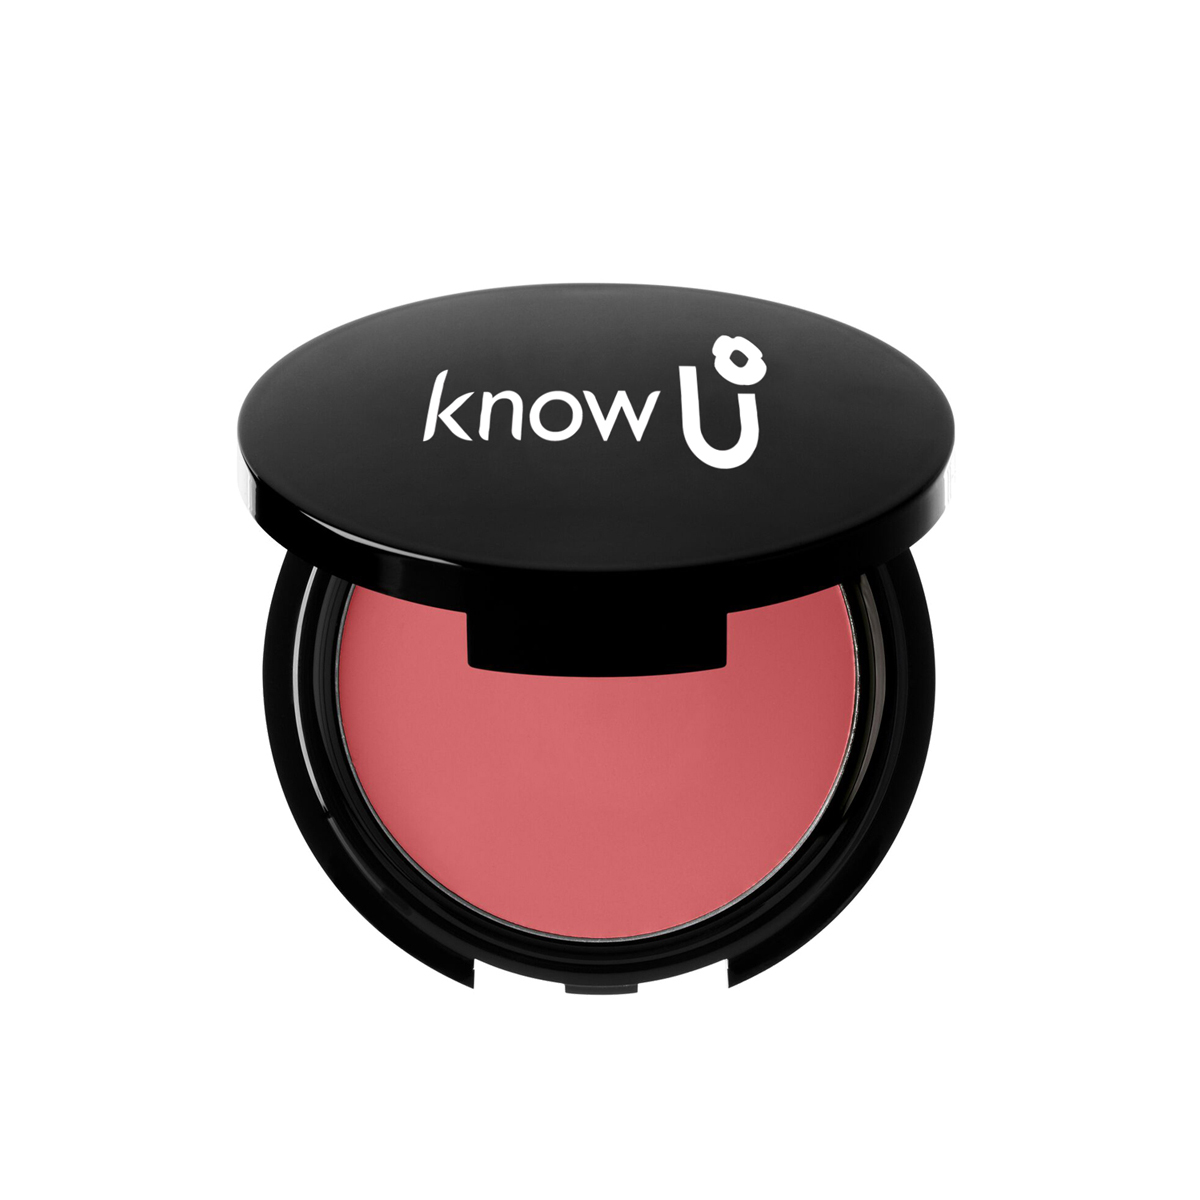 Know U Cosmetics Blush 200401